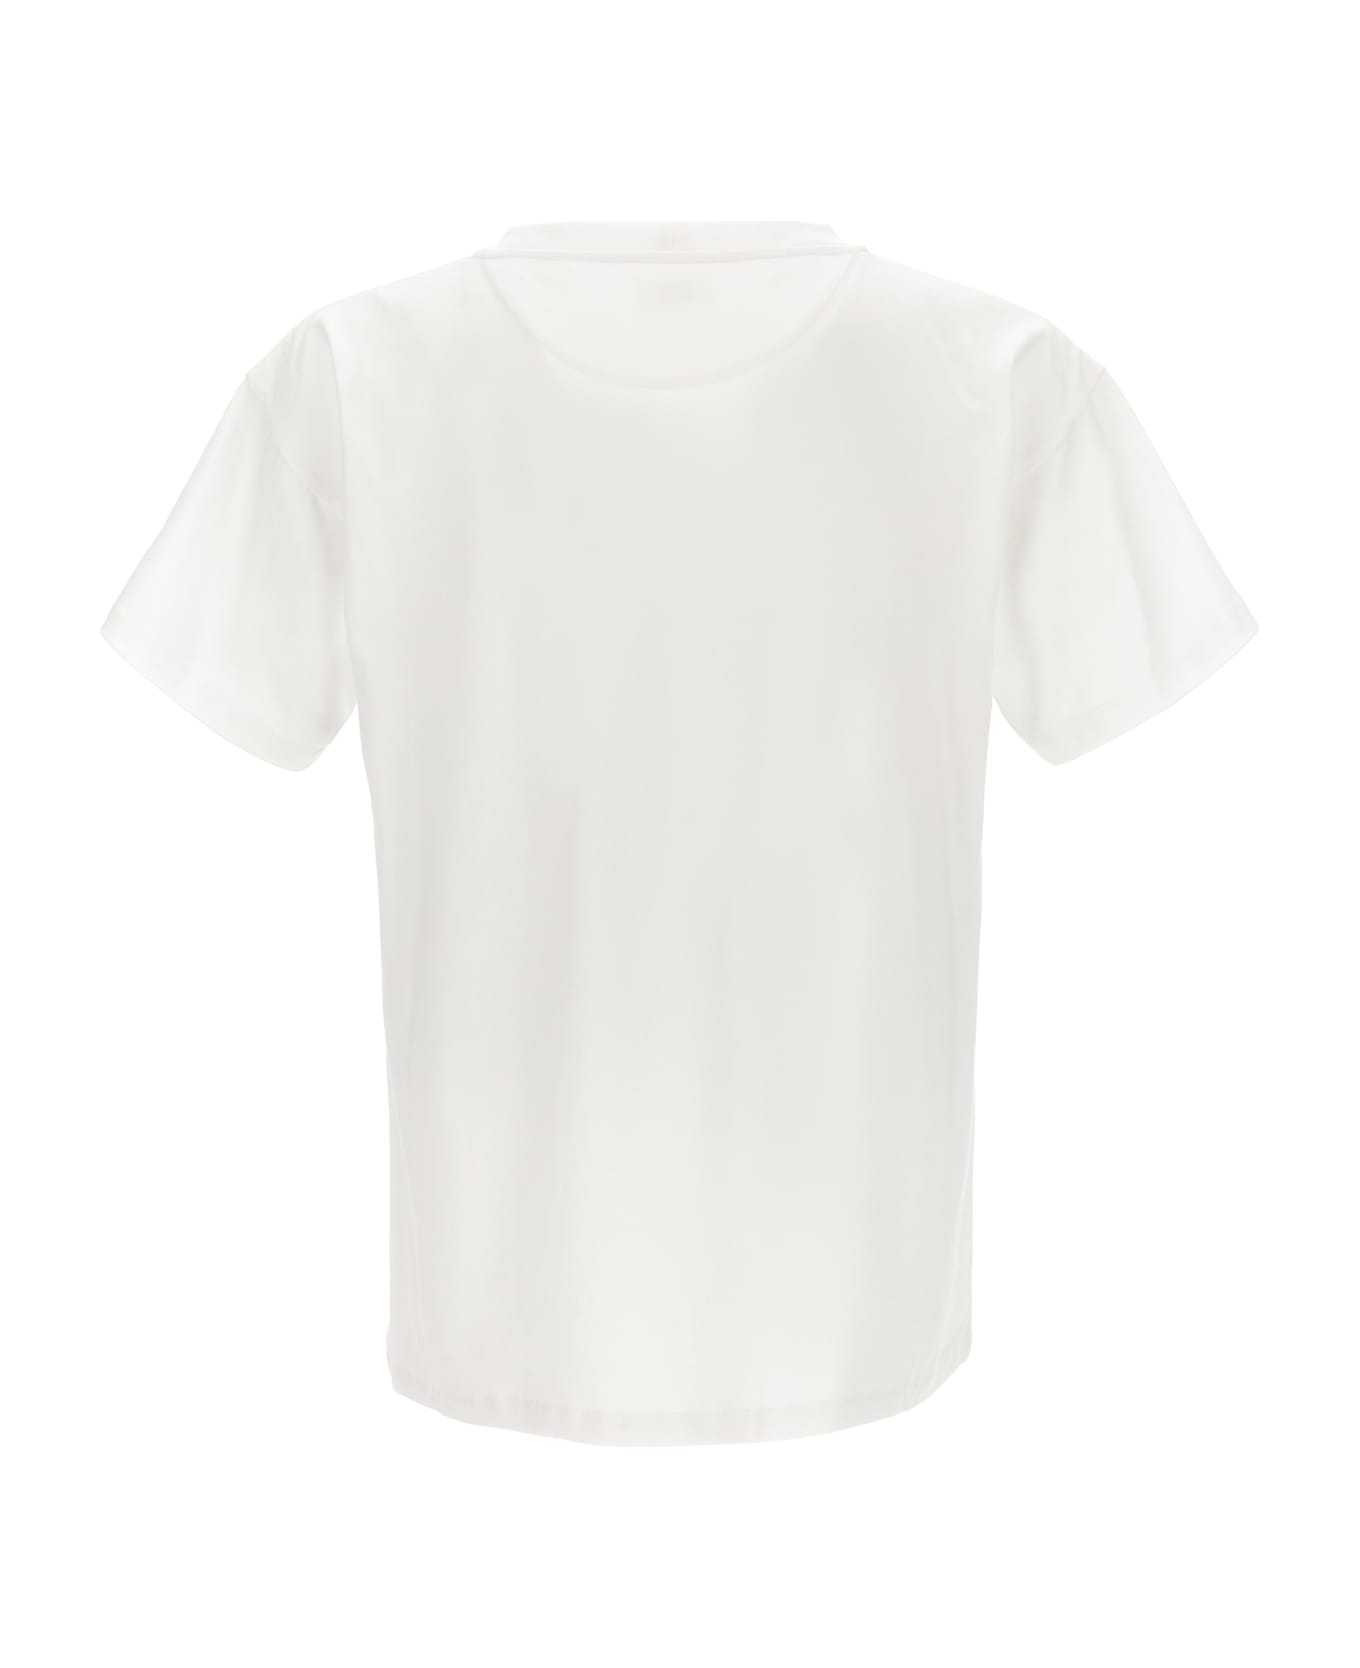 Bally Flocked Logo T-shirt - White/Black